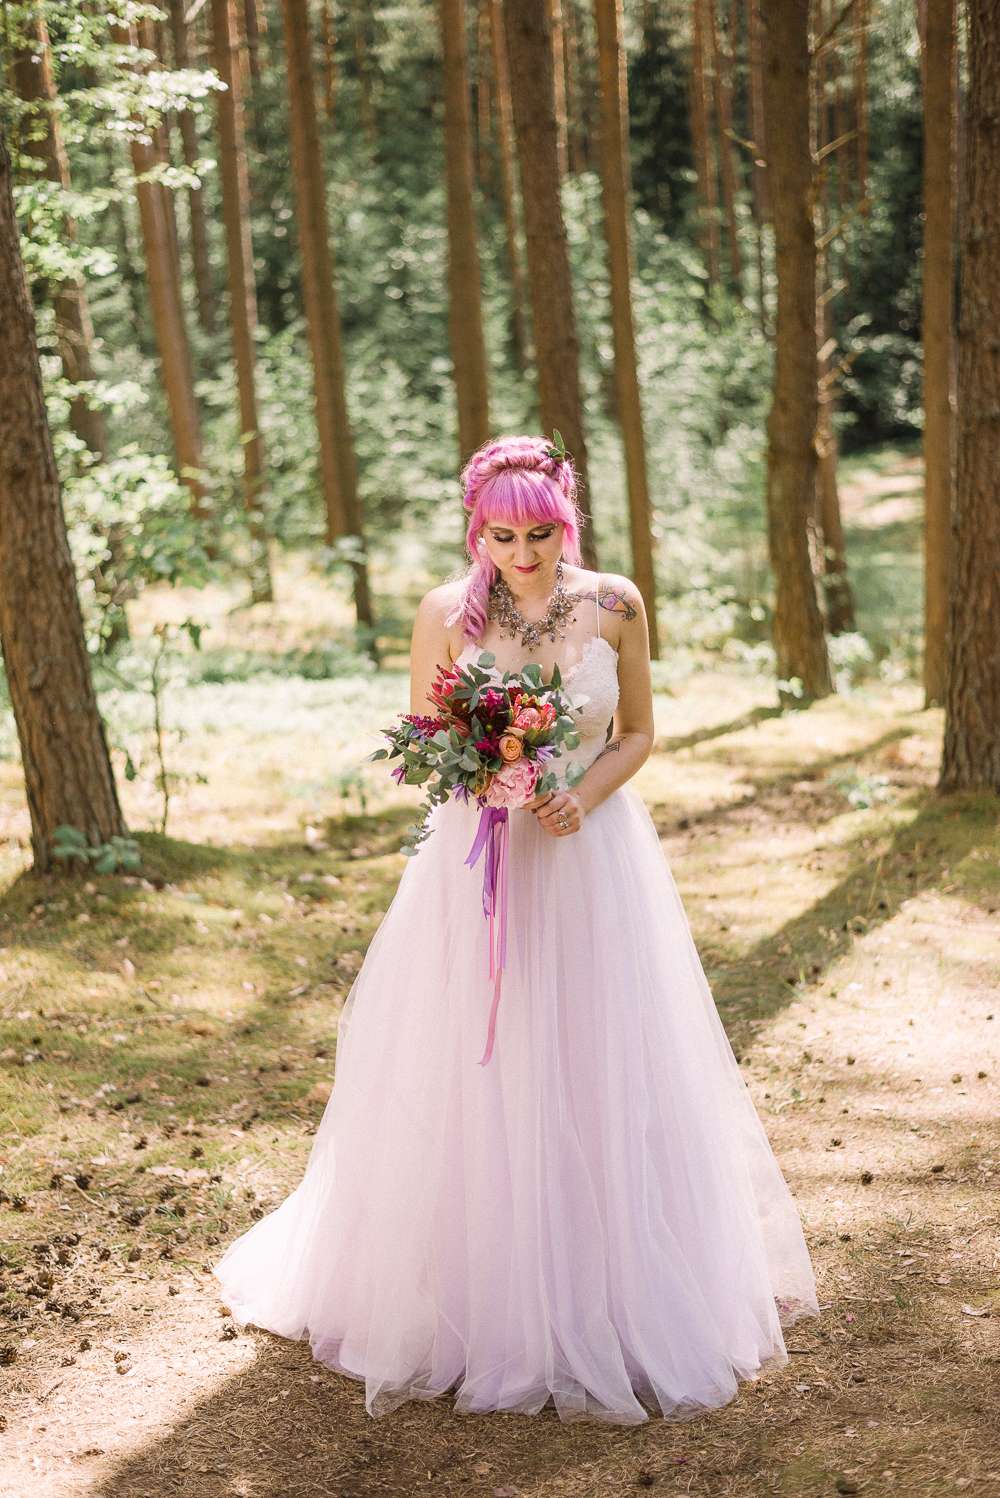 Once Upon a Dream Bohemian Woodland Fairytale Wedding (32)